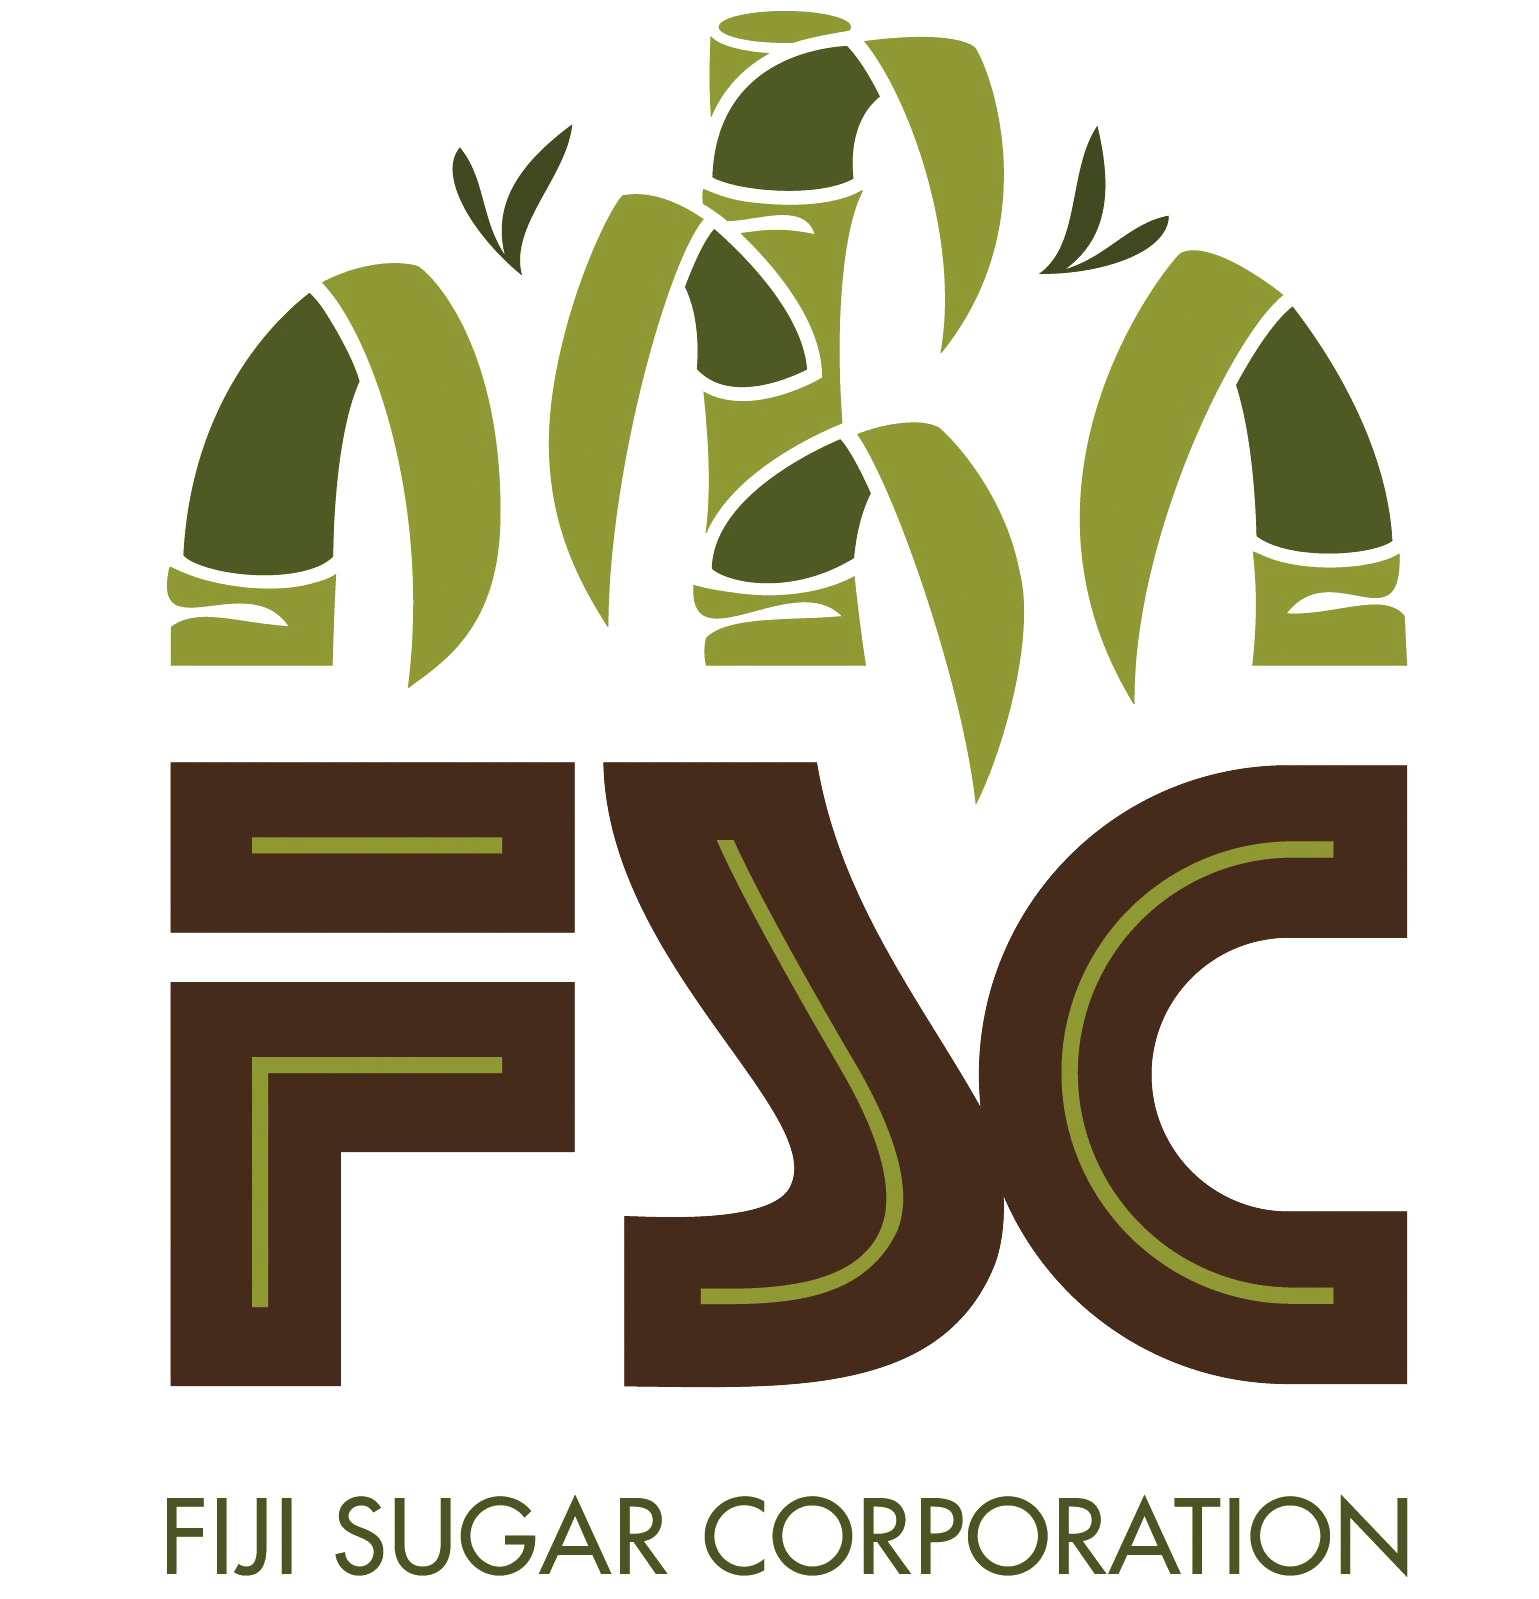 Fijian Company Logo - Fiji Sugar Corporation